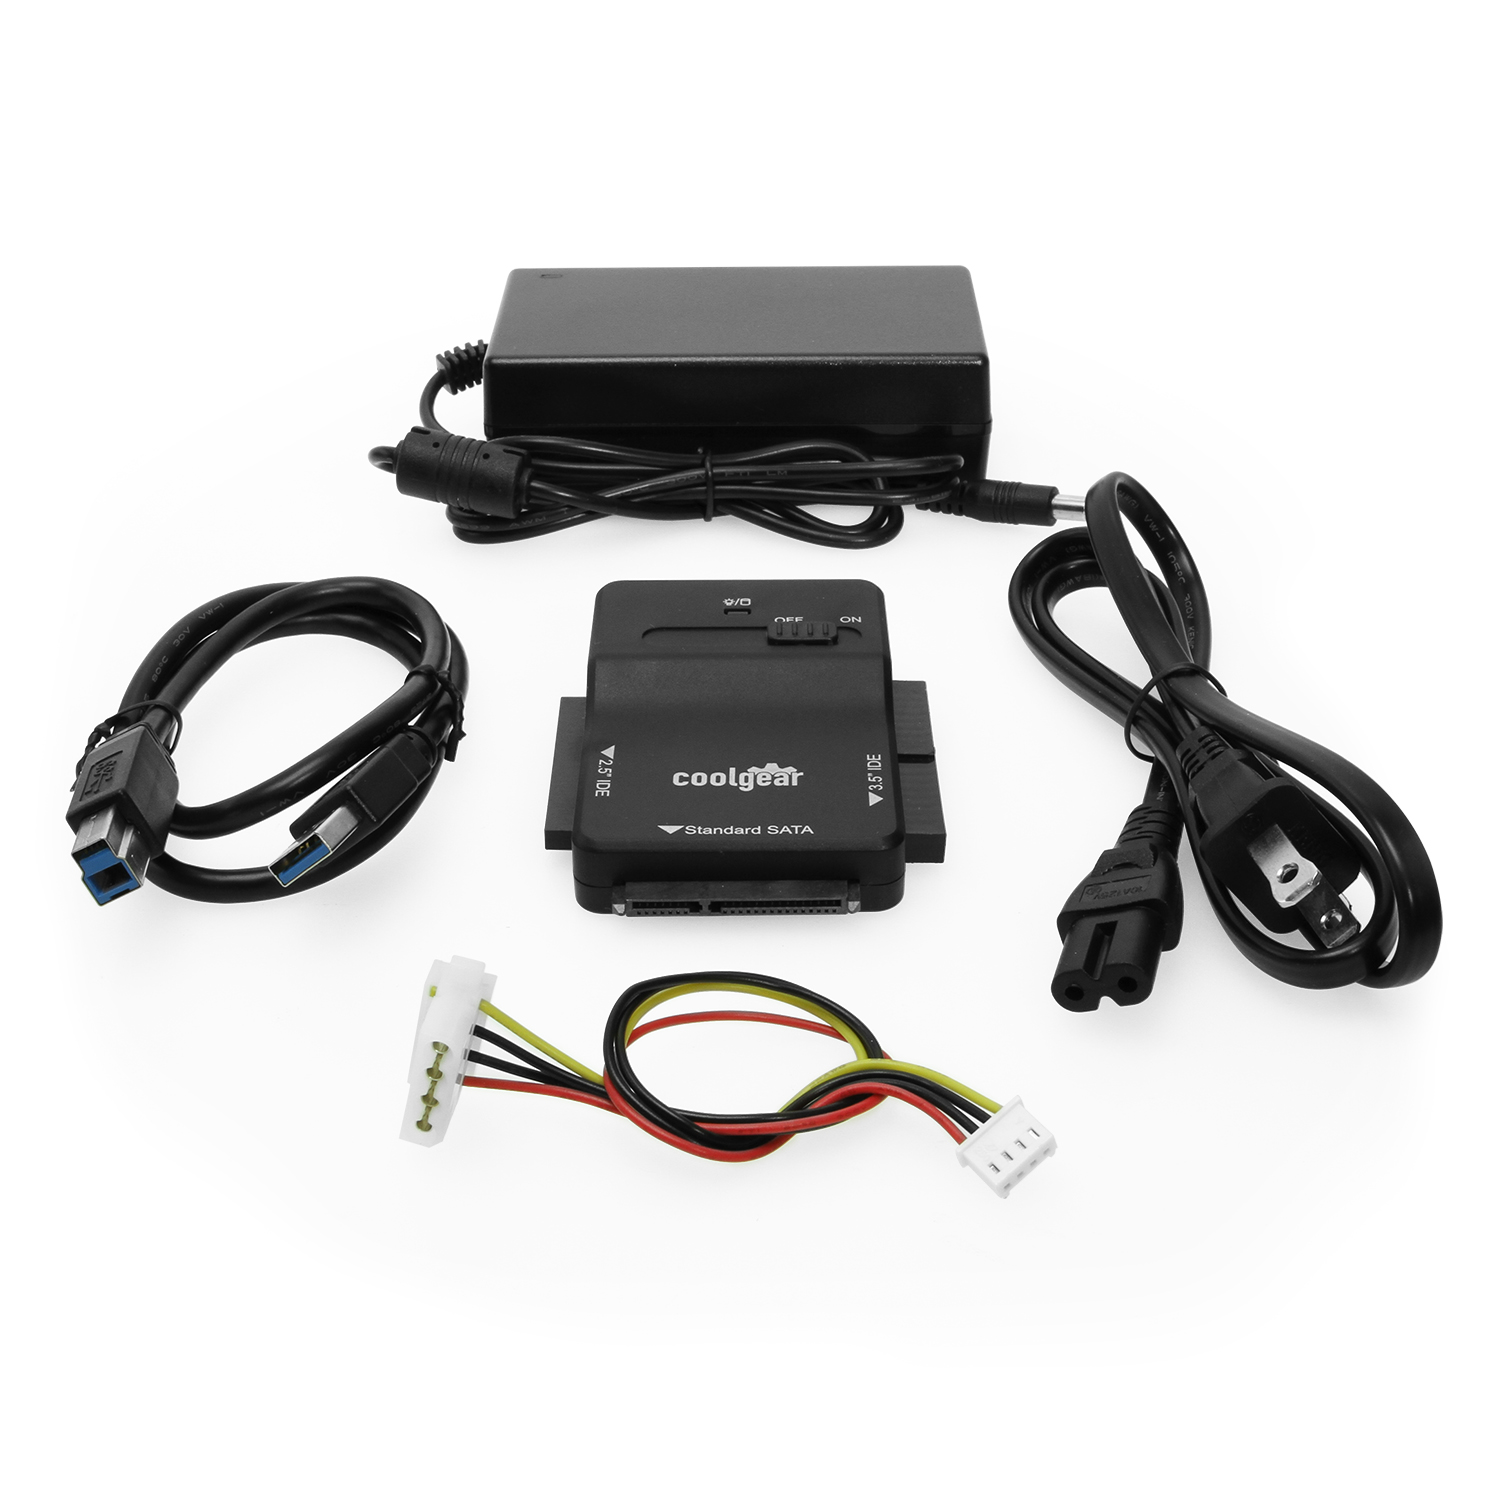 Coolgear USB 3.0 to SATA or Pata Hard Drive Adapter